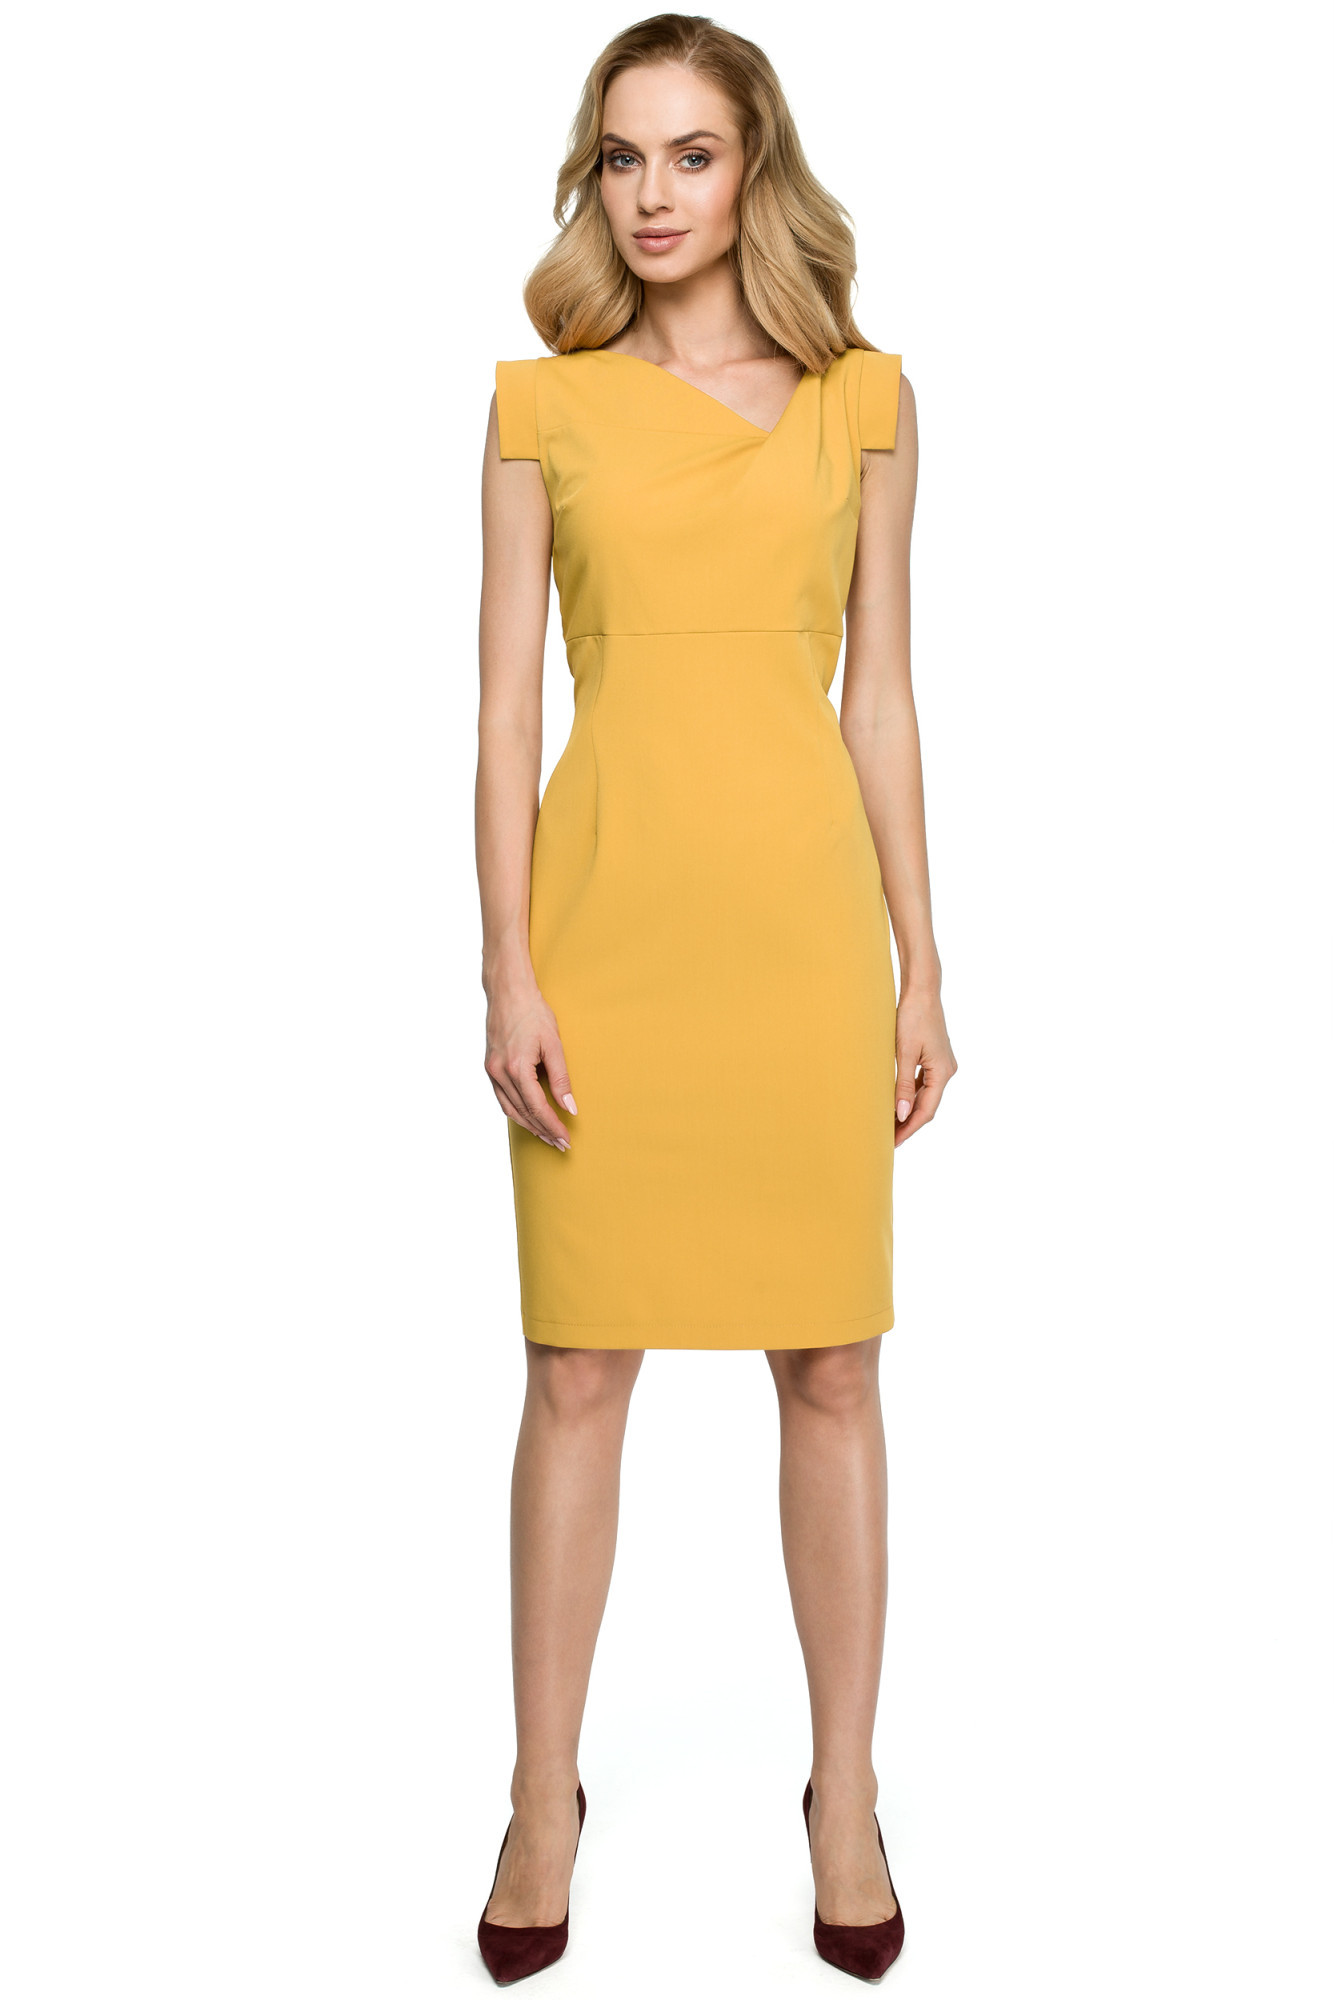 Stylove Dress S121 Yellow M